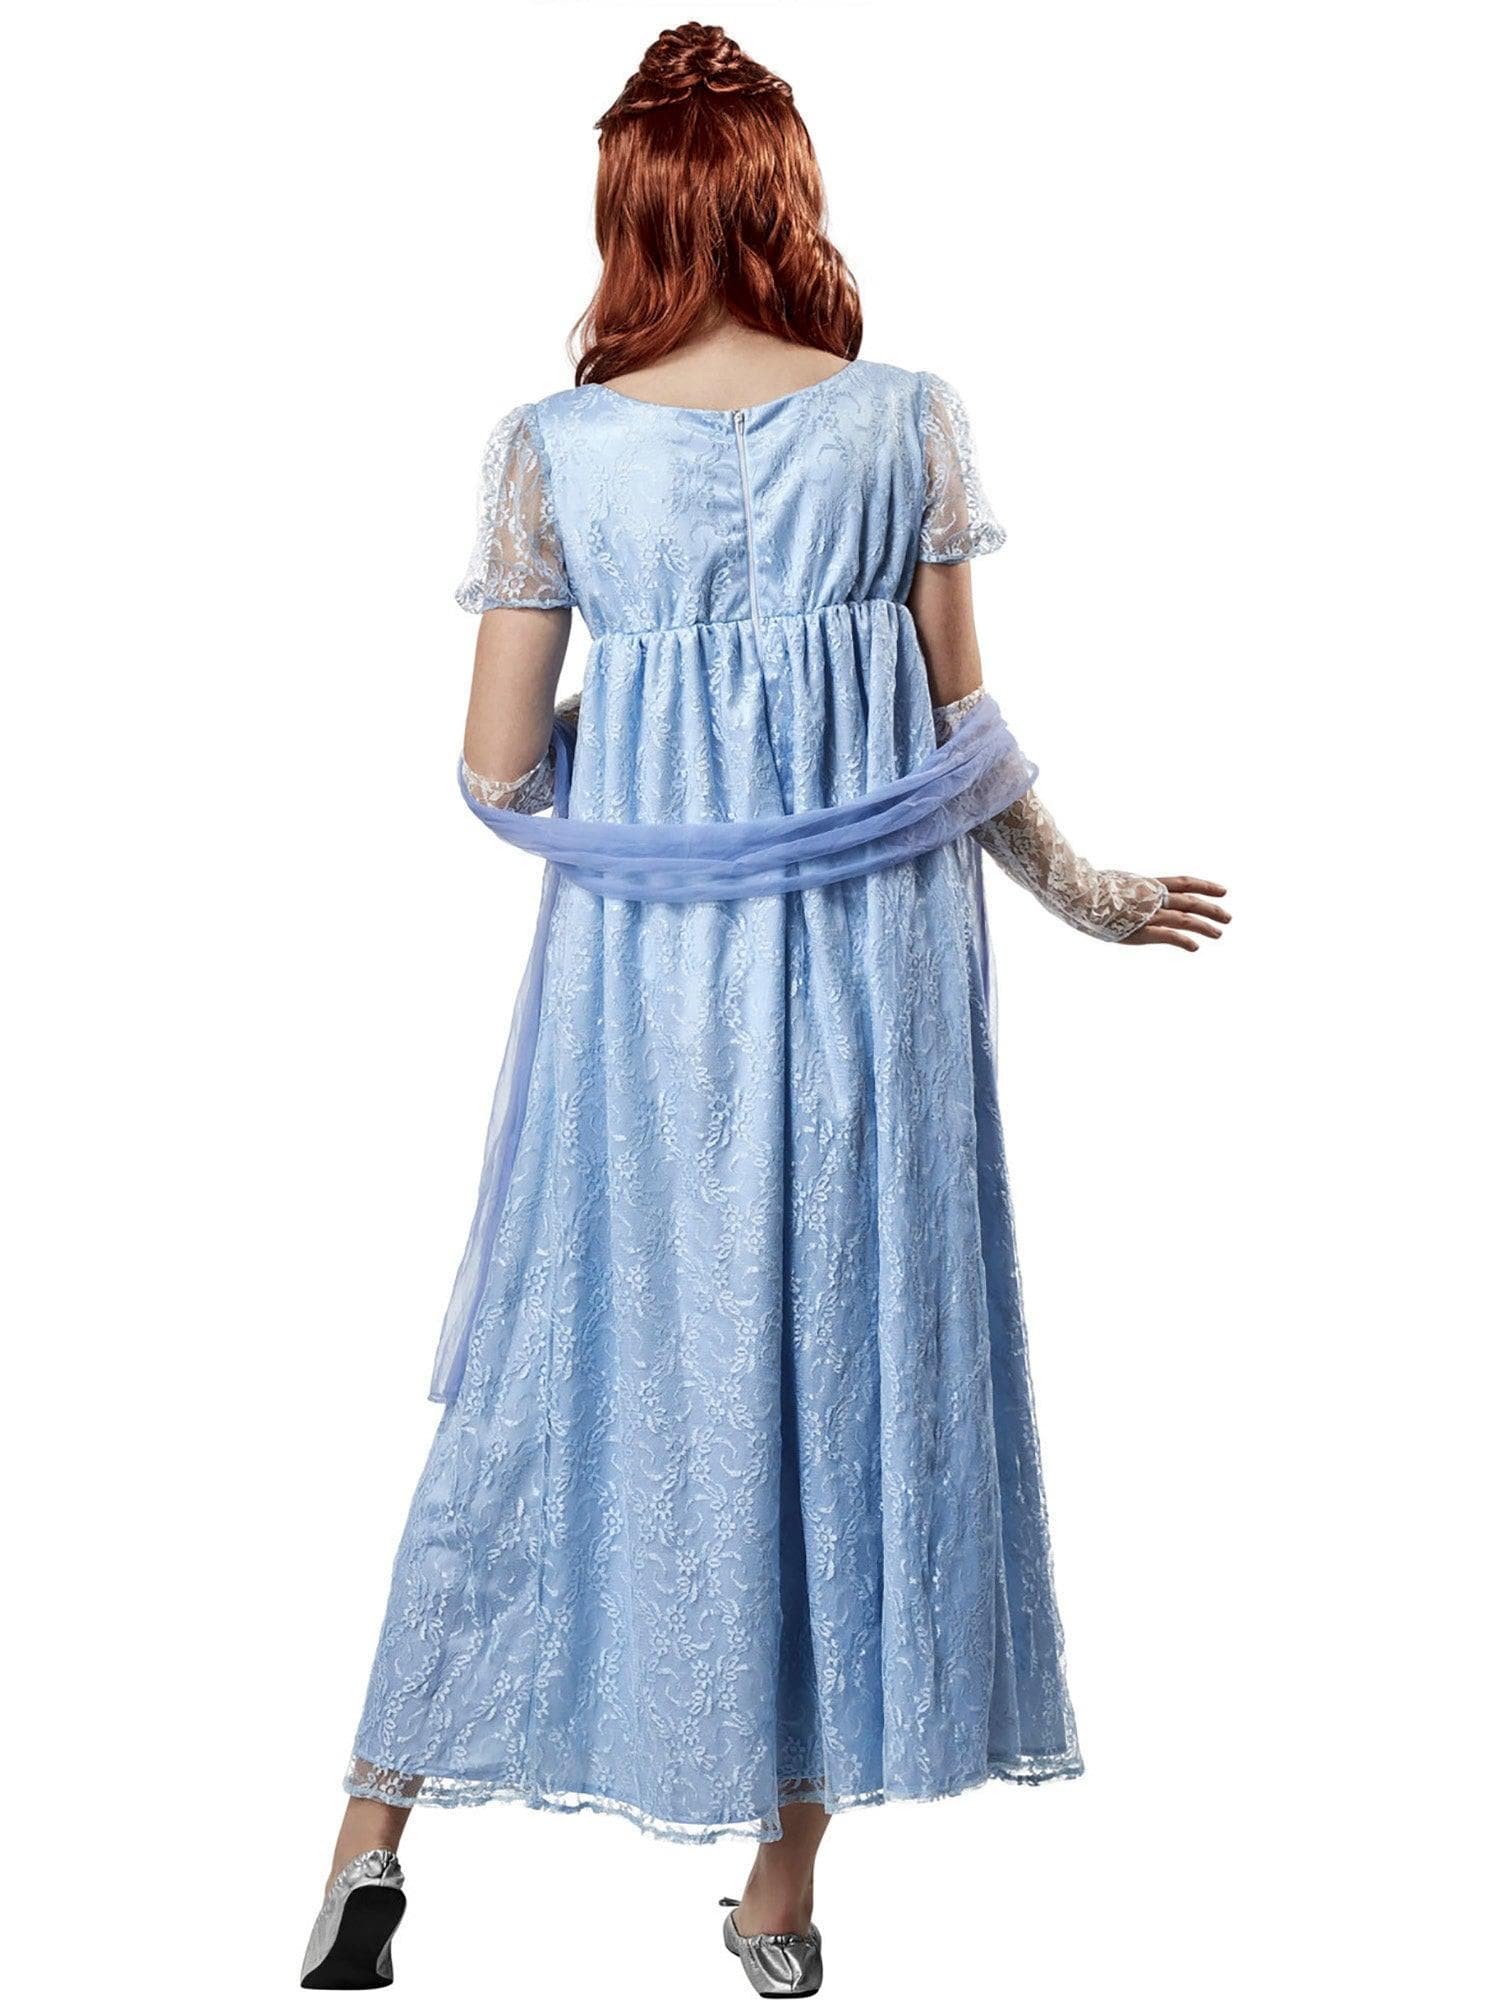 Women's Regency Blue Lace Dress - costumes.com